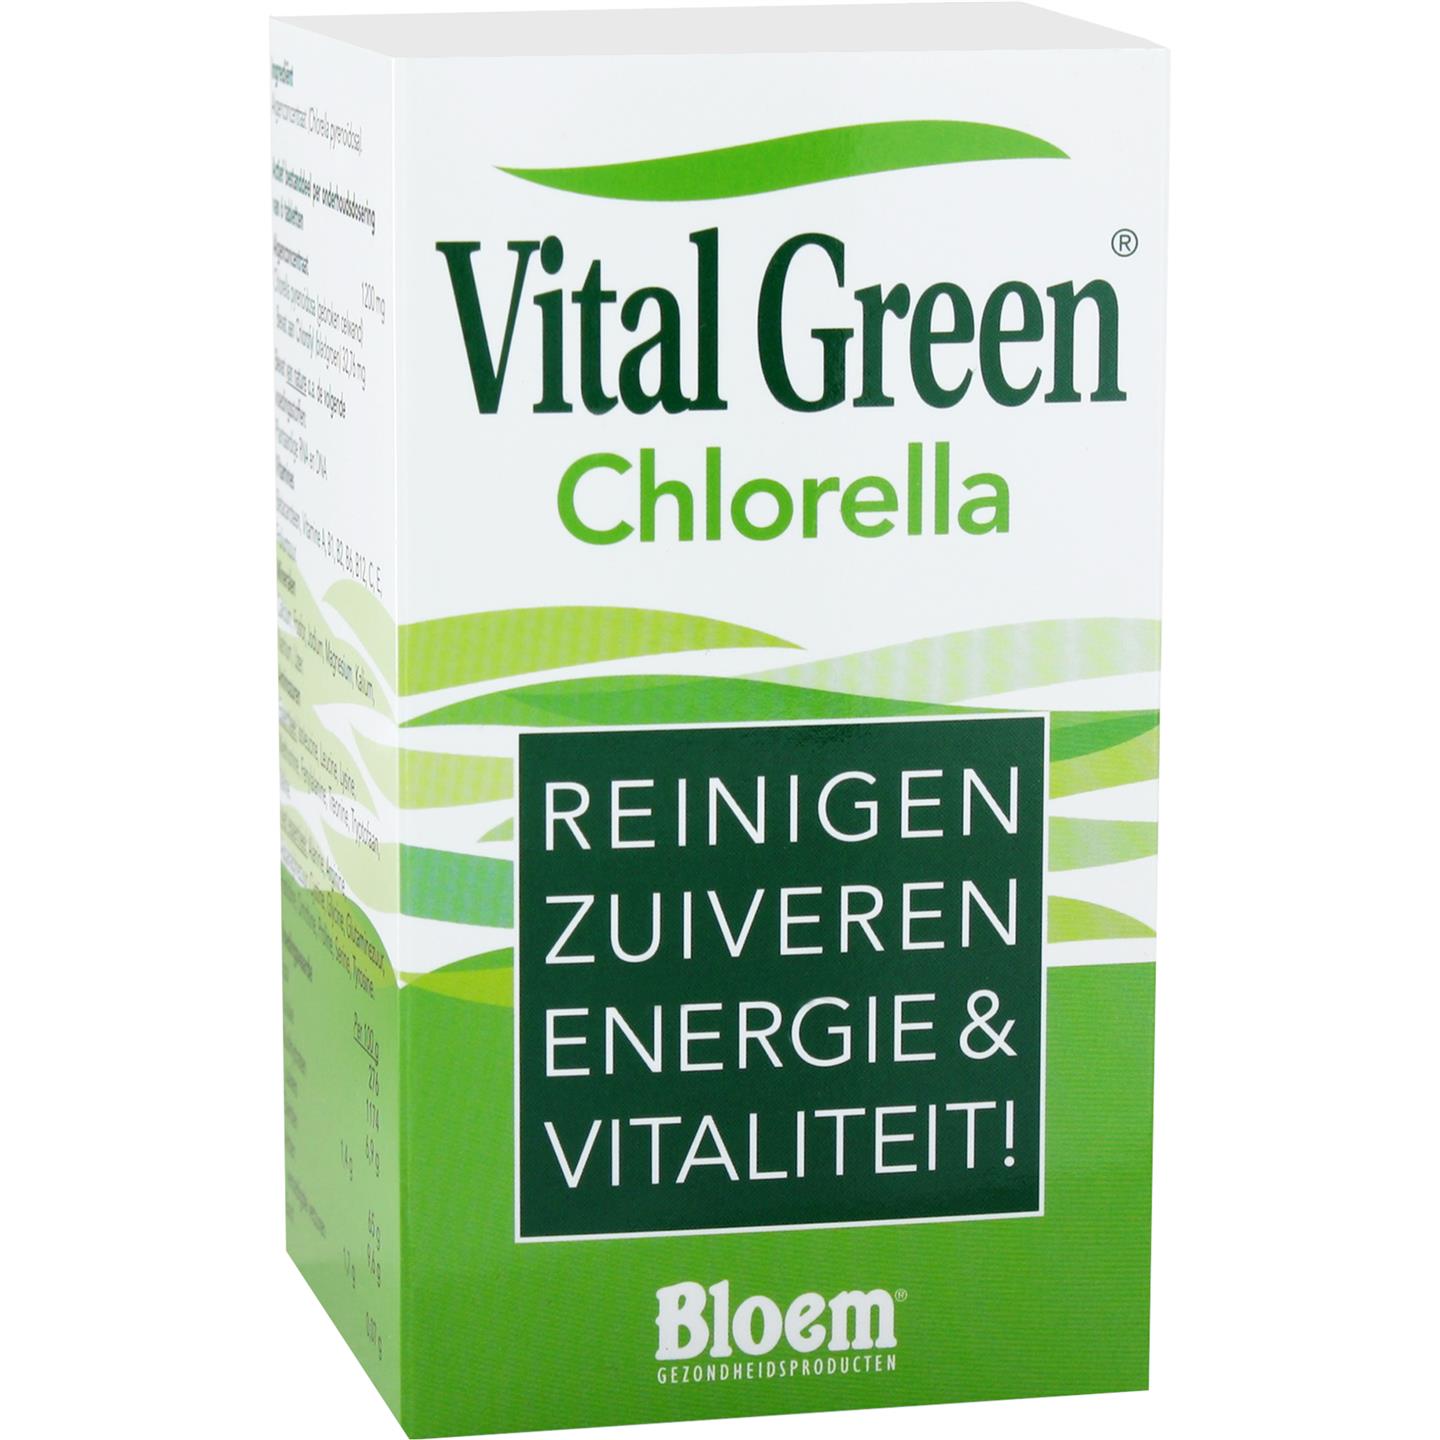 Vita green. Зеленый Виталь зеленый Виталь. Vita Green Health products Company Limited, , sedative Plants. Vital Green qanaqa Dori.